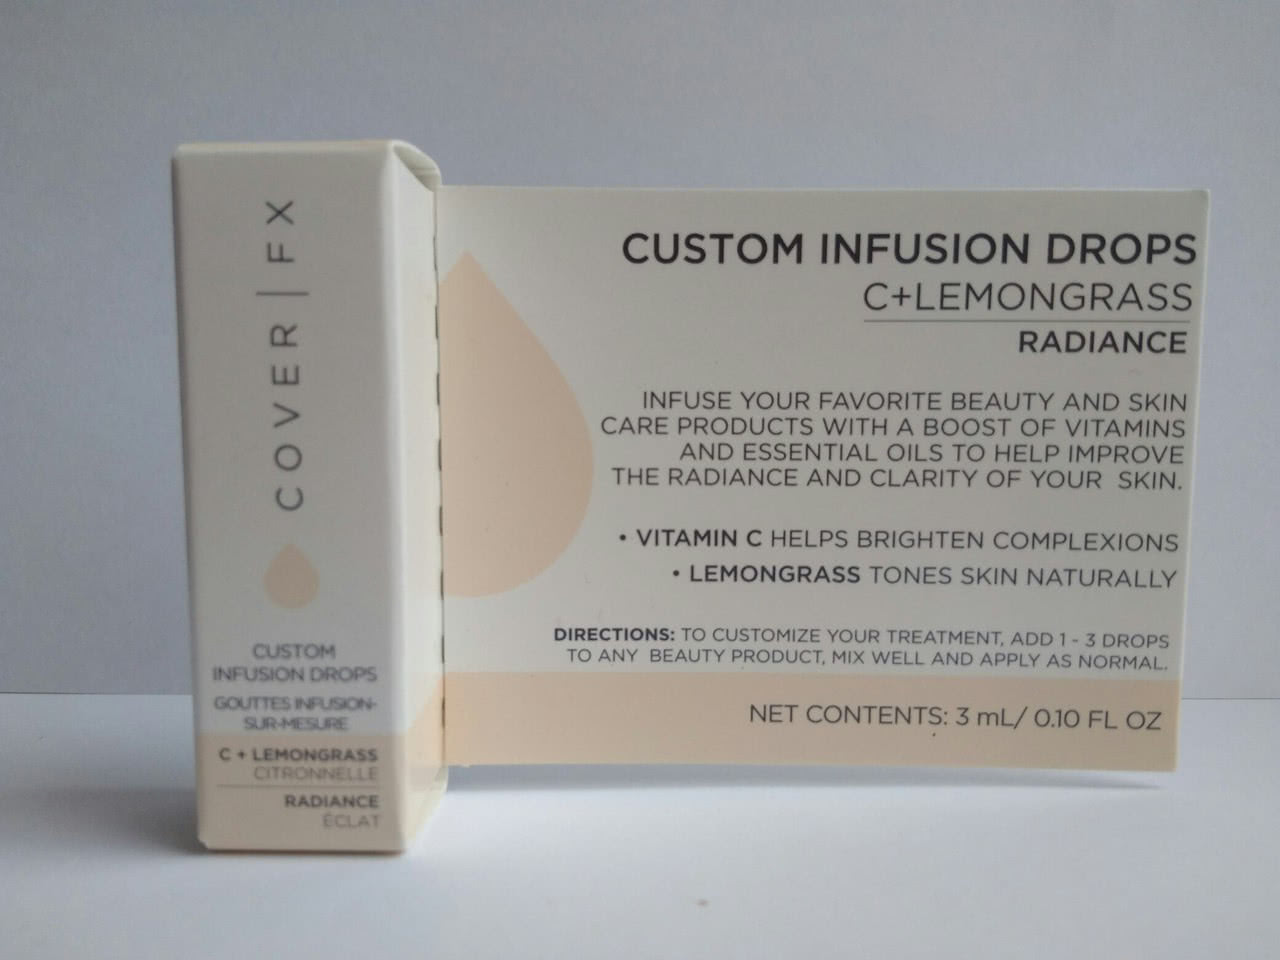 Cover FX Custom Infusion Drops "C + Lemongrass - Radiance"